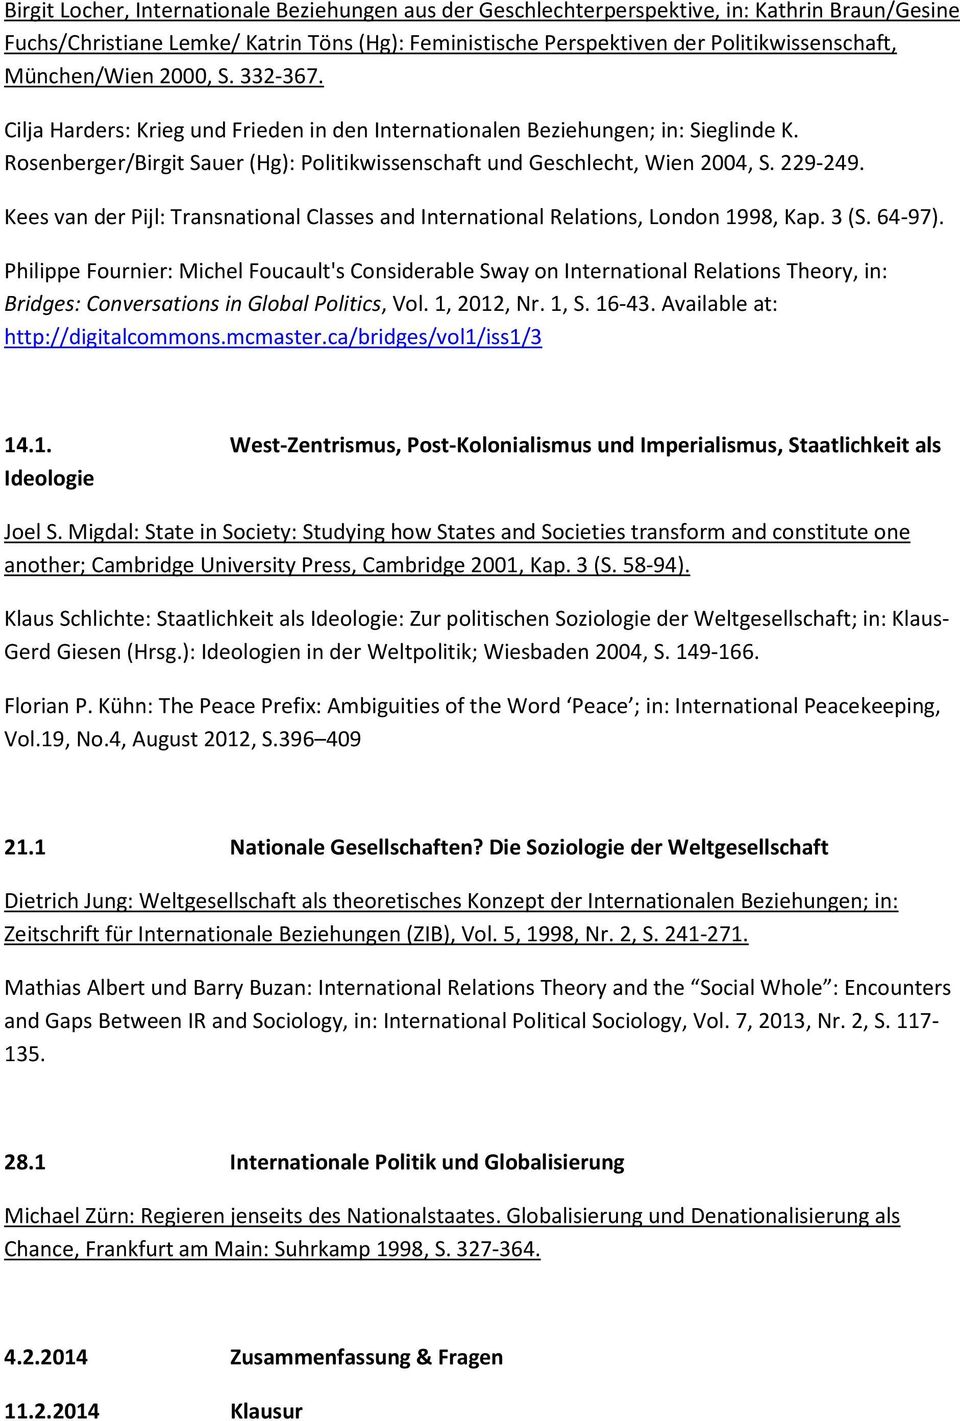 229-249. Kees van der Pijl: Transnational Classes and International Relations, London 1998, Kap. 3 (S. 64-97).